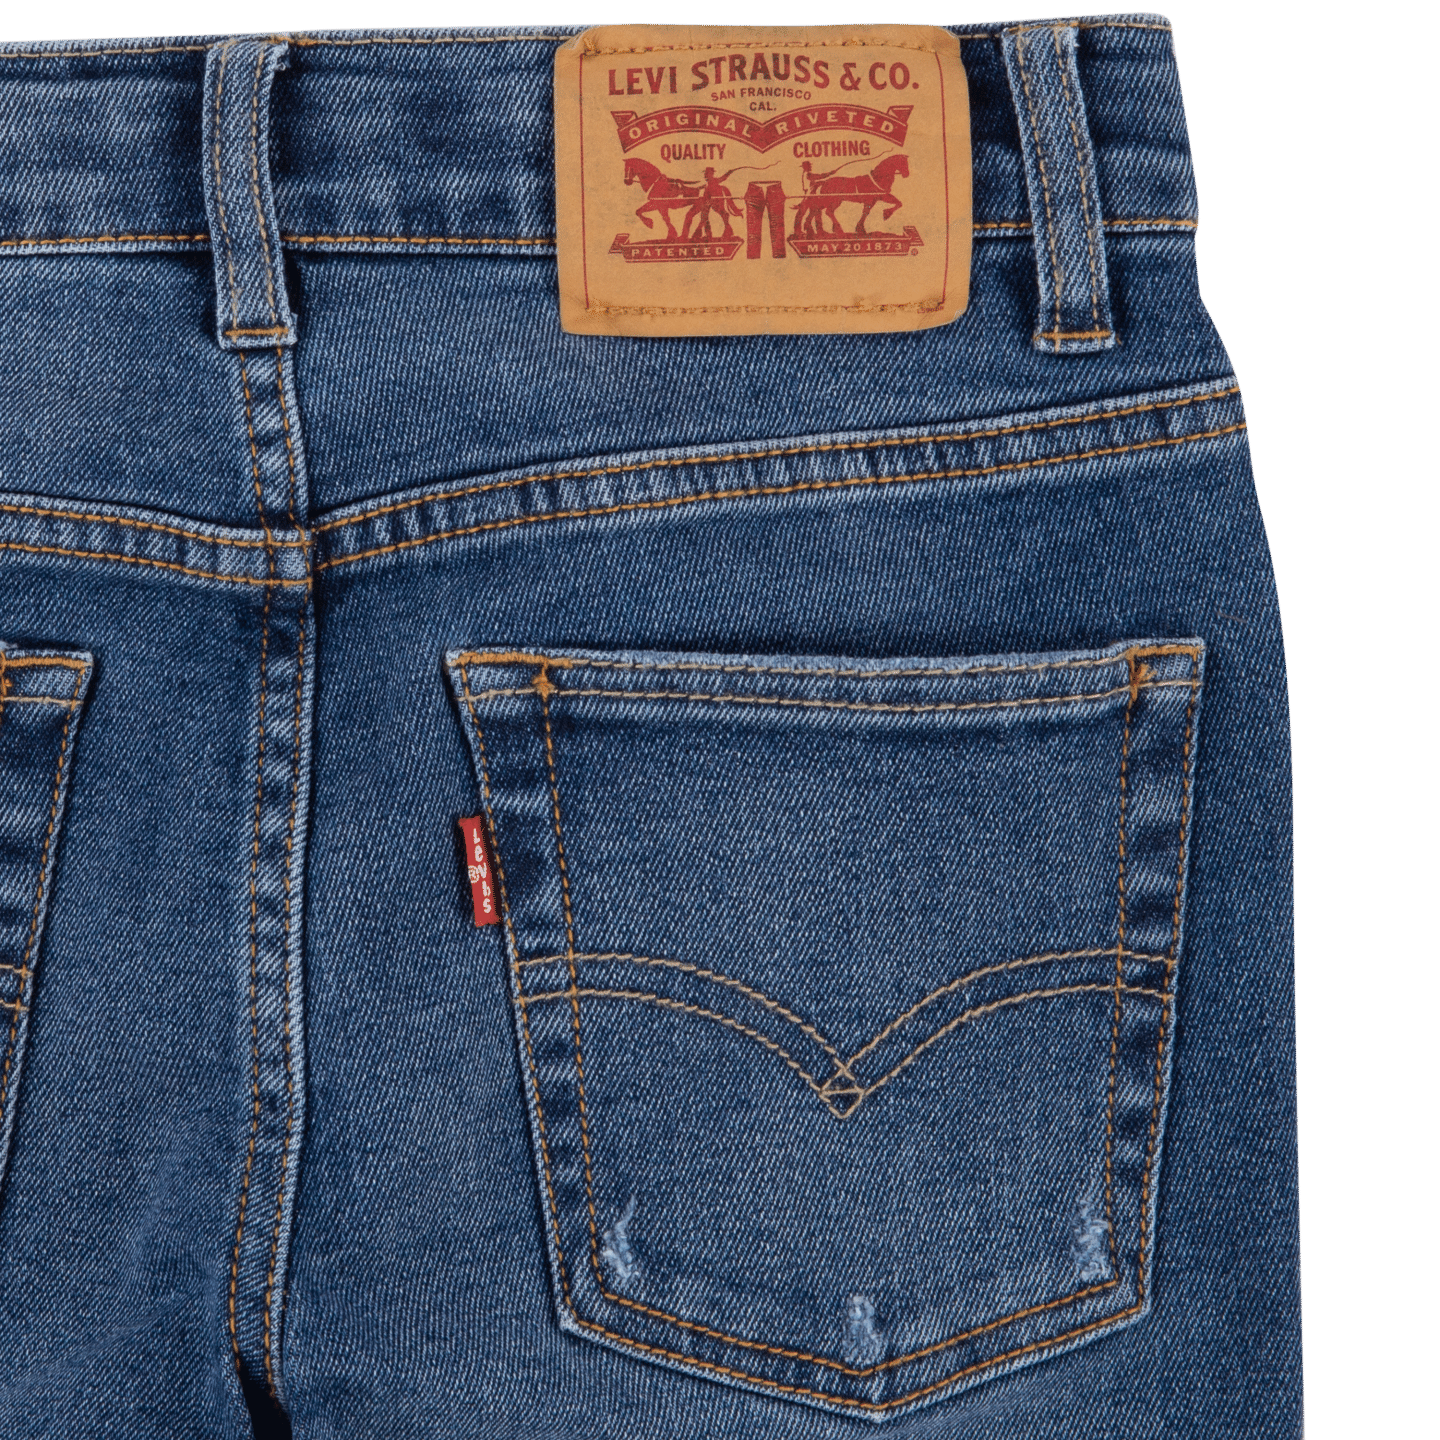 Levi's boys distressed jeans back pocket